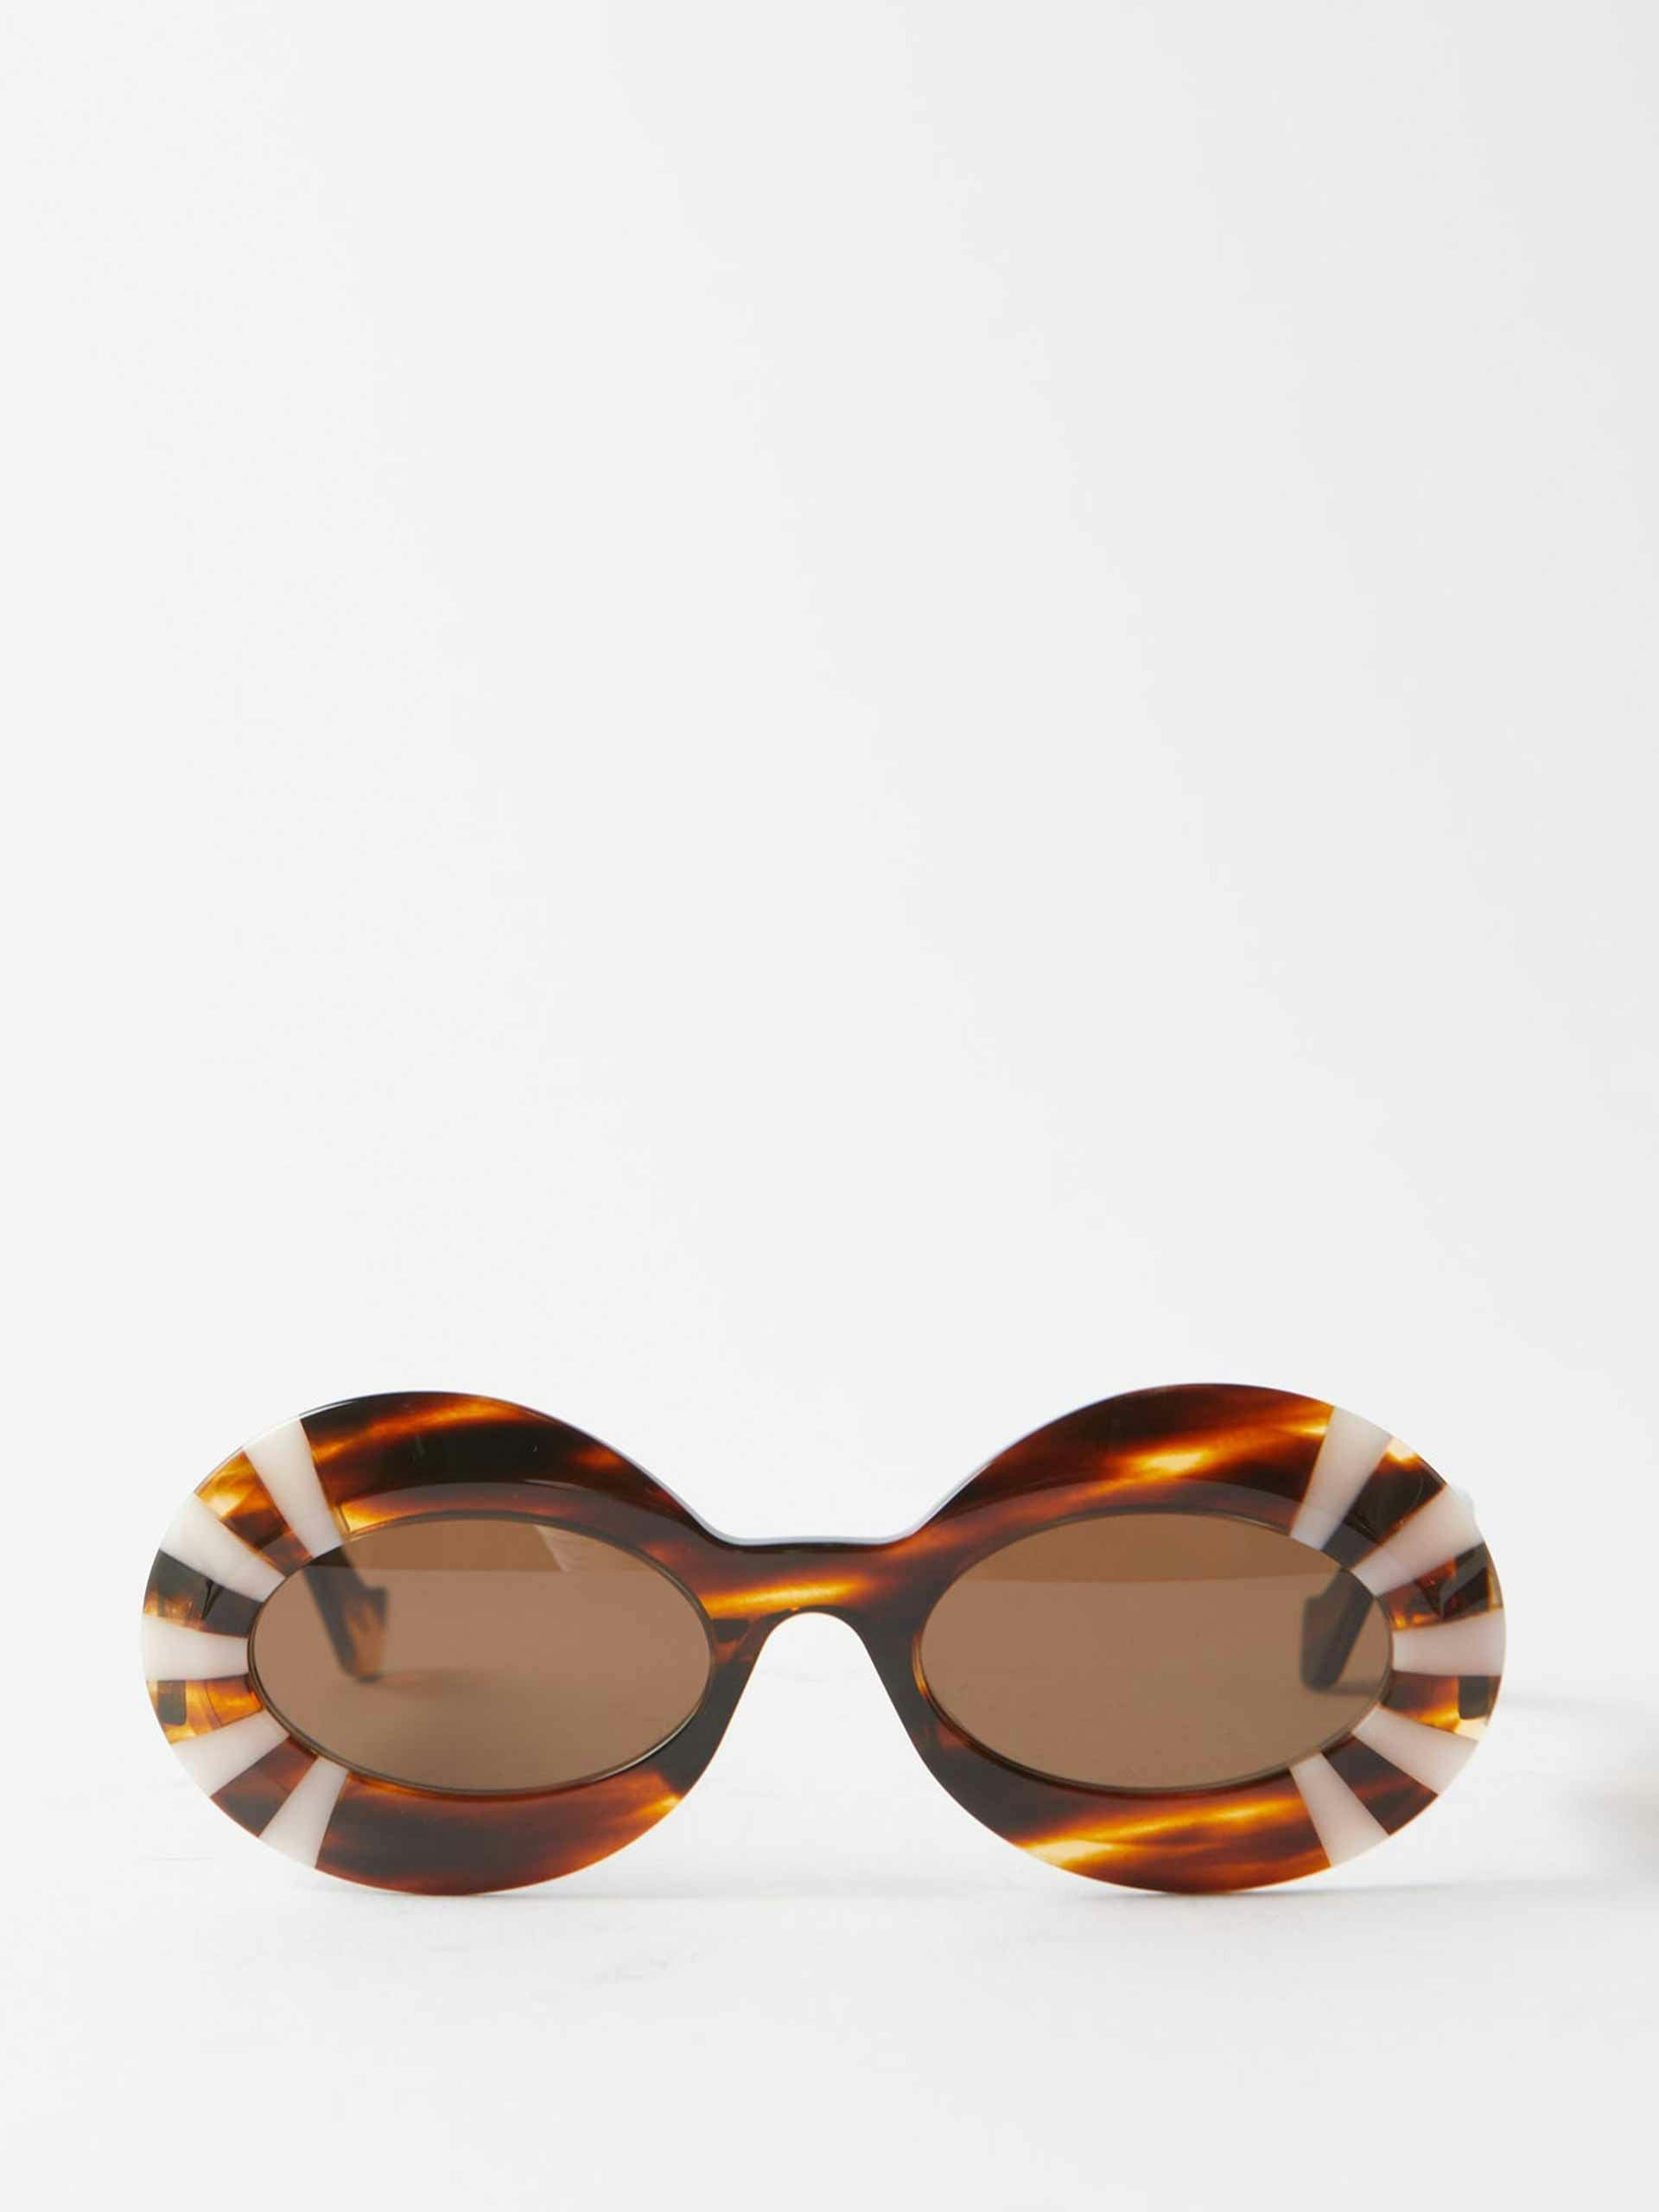 Striped round sunglasses